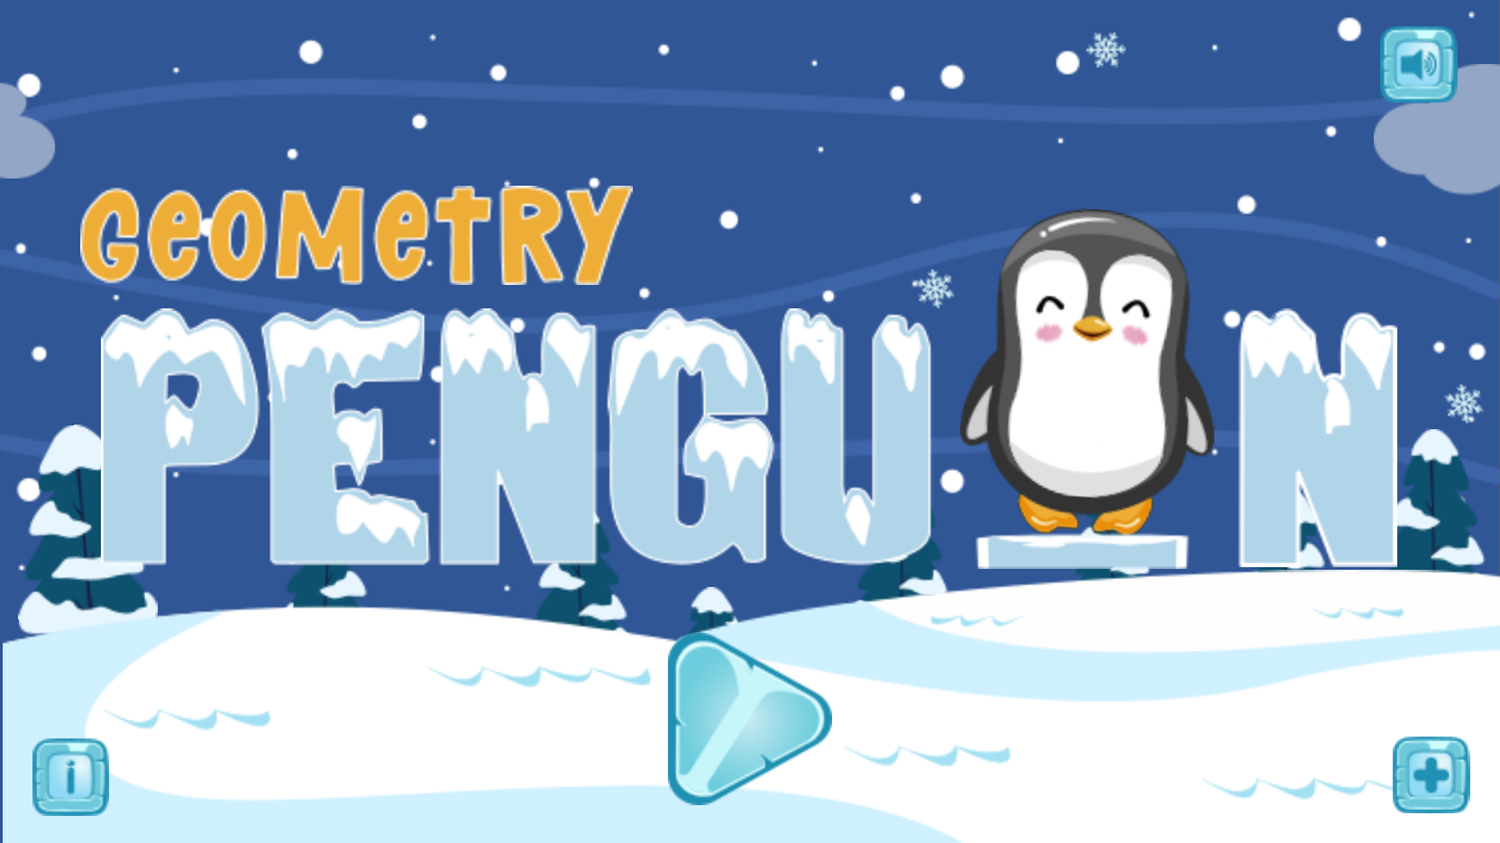 Geometry Penguin Game Welcome Screen Screenshot.